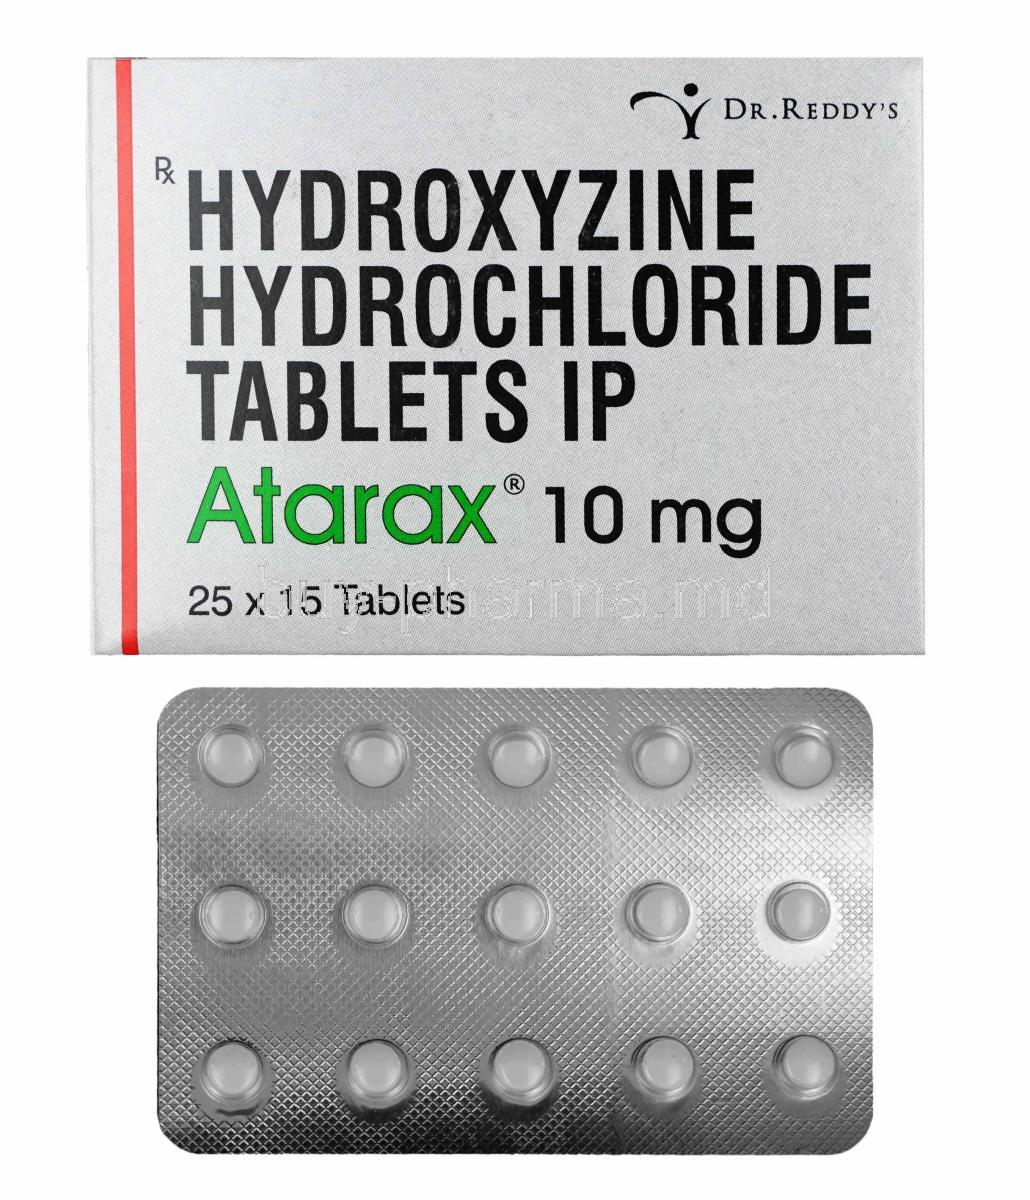 Atarax, Hydroxyzine 10mg box and tablets